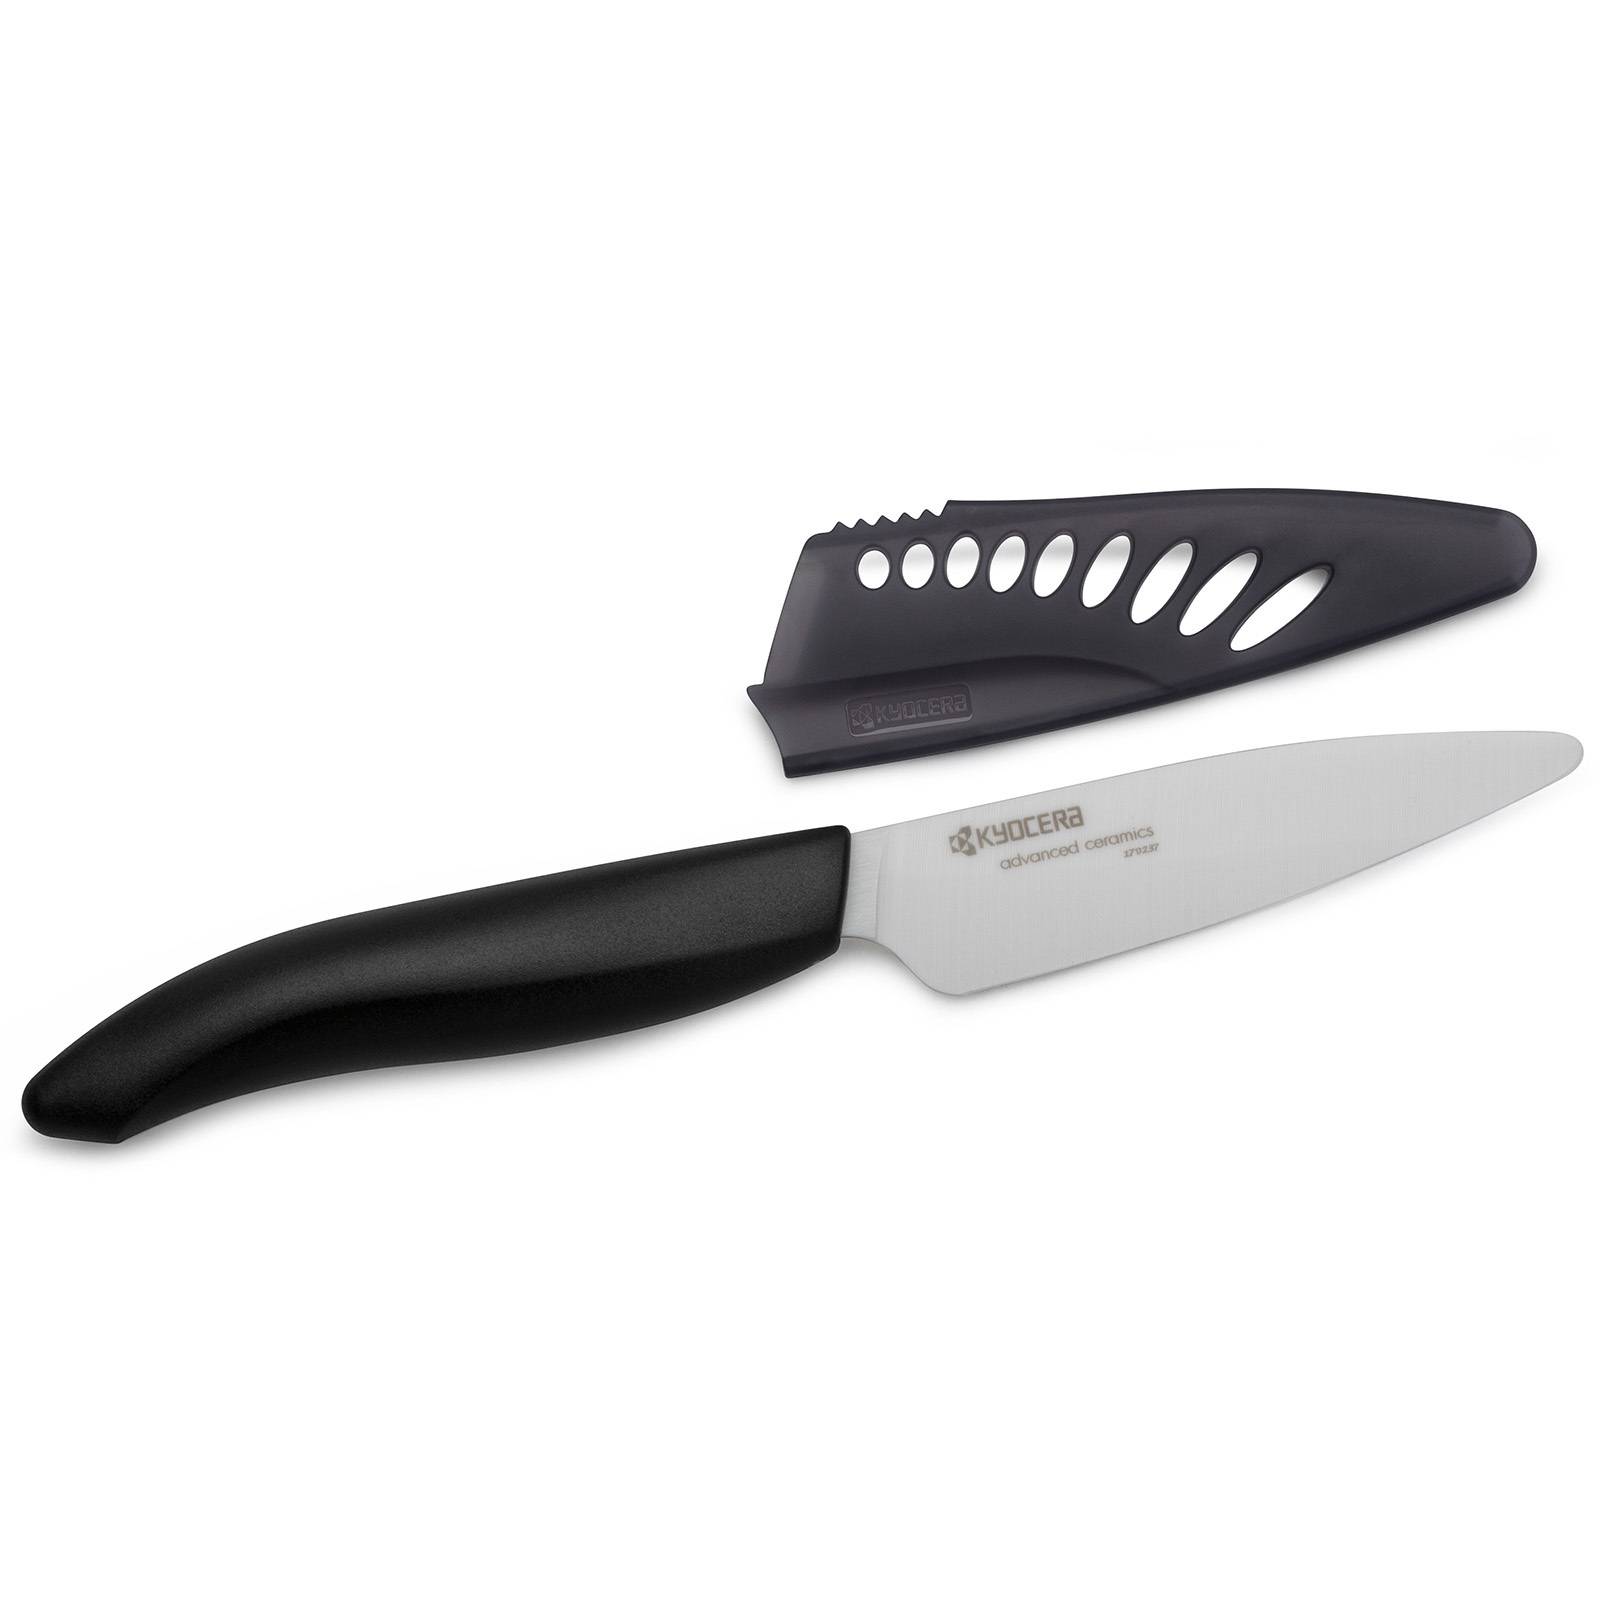 Kyocera 3.7-Inch Fruit Knife with Sheath